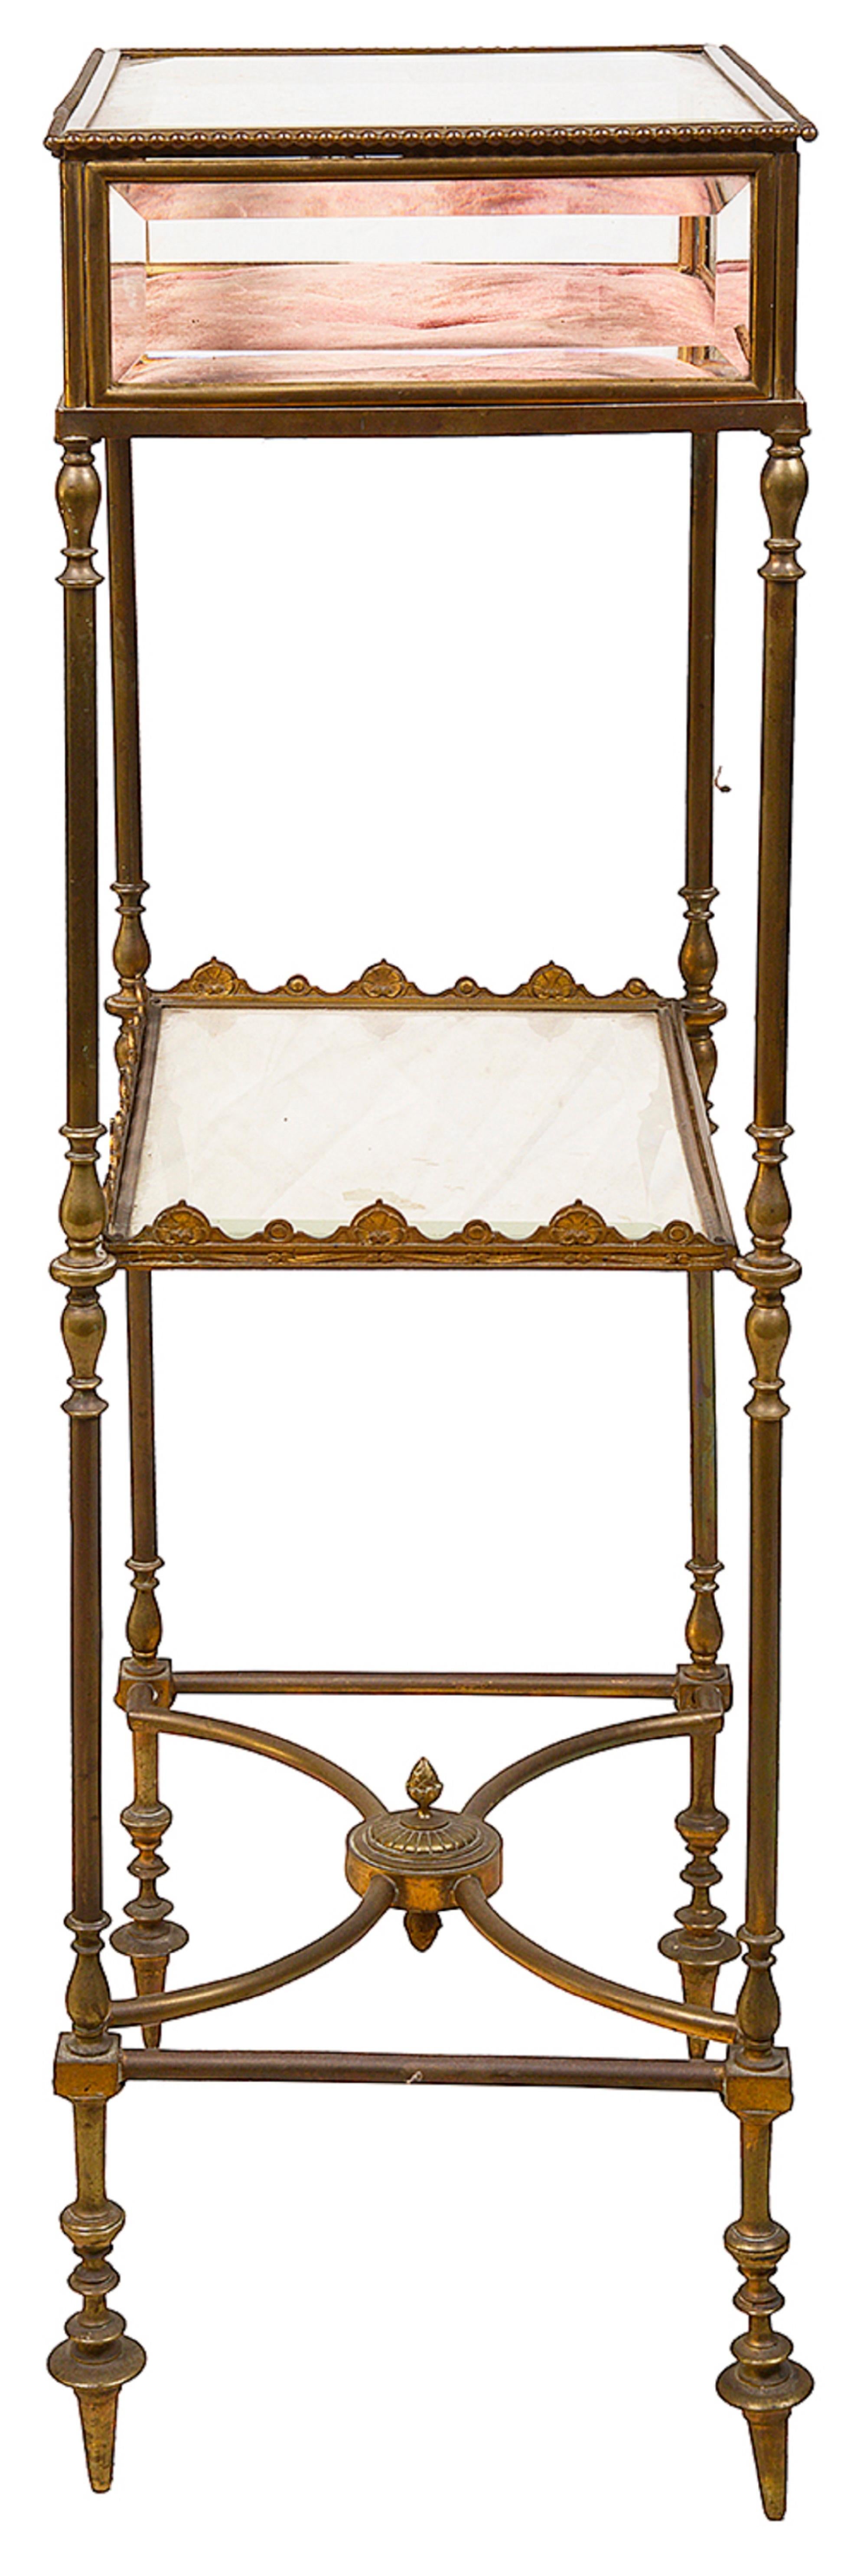 Gilt A French gilded ormolu bijouterie display table, circa 1890